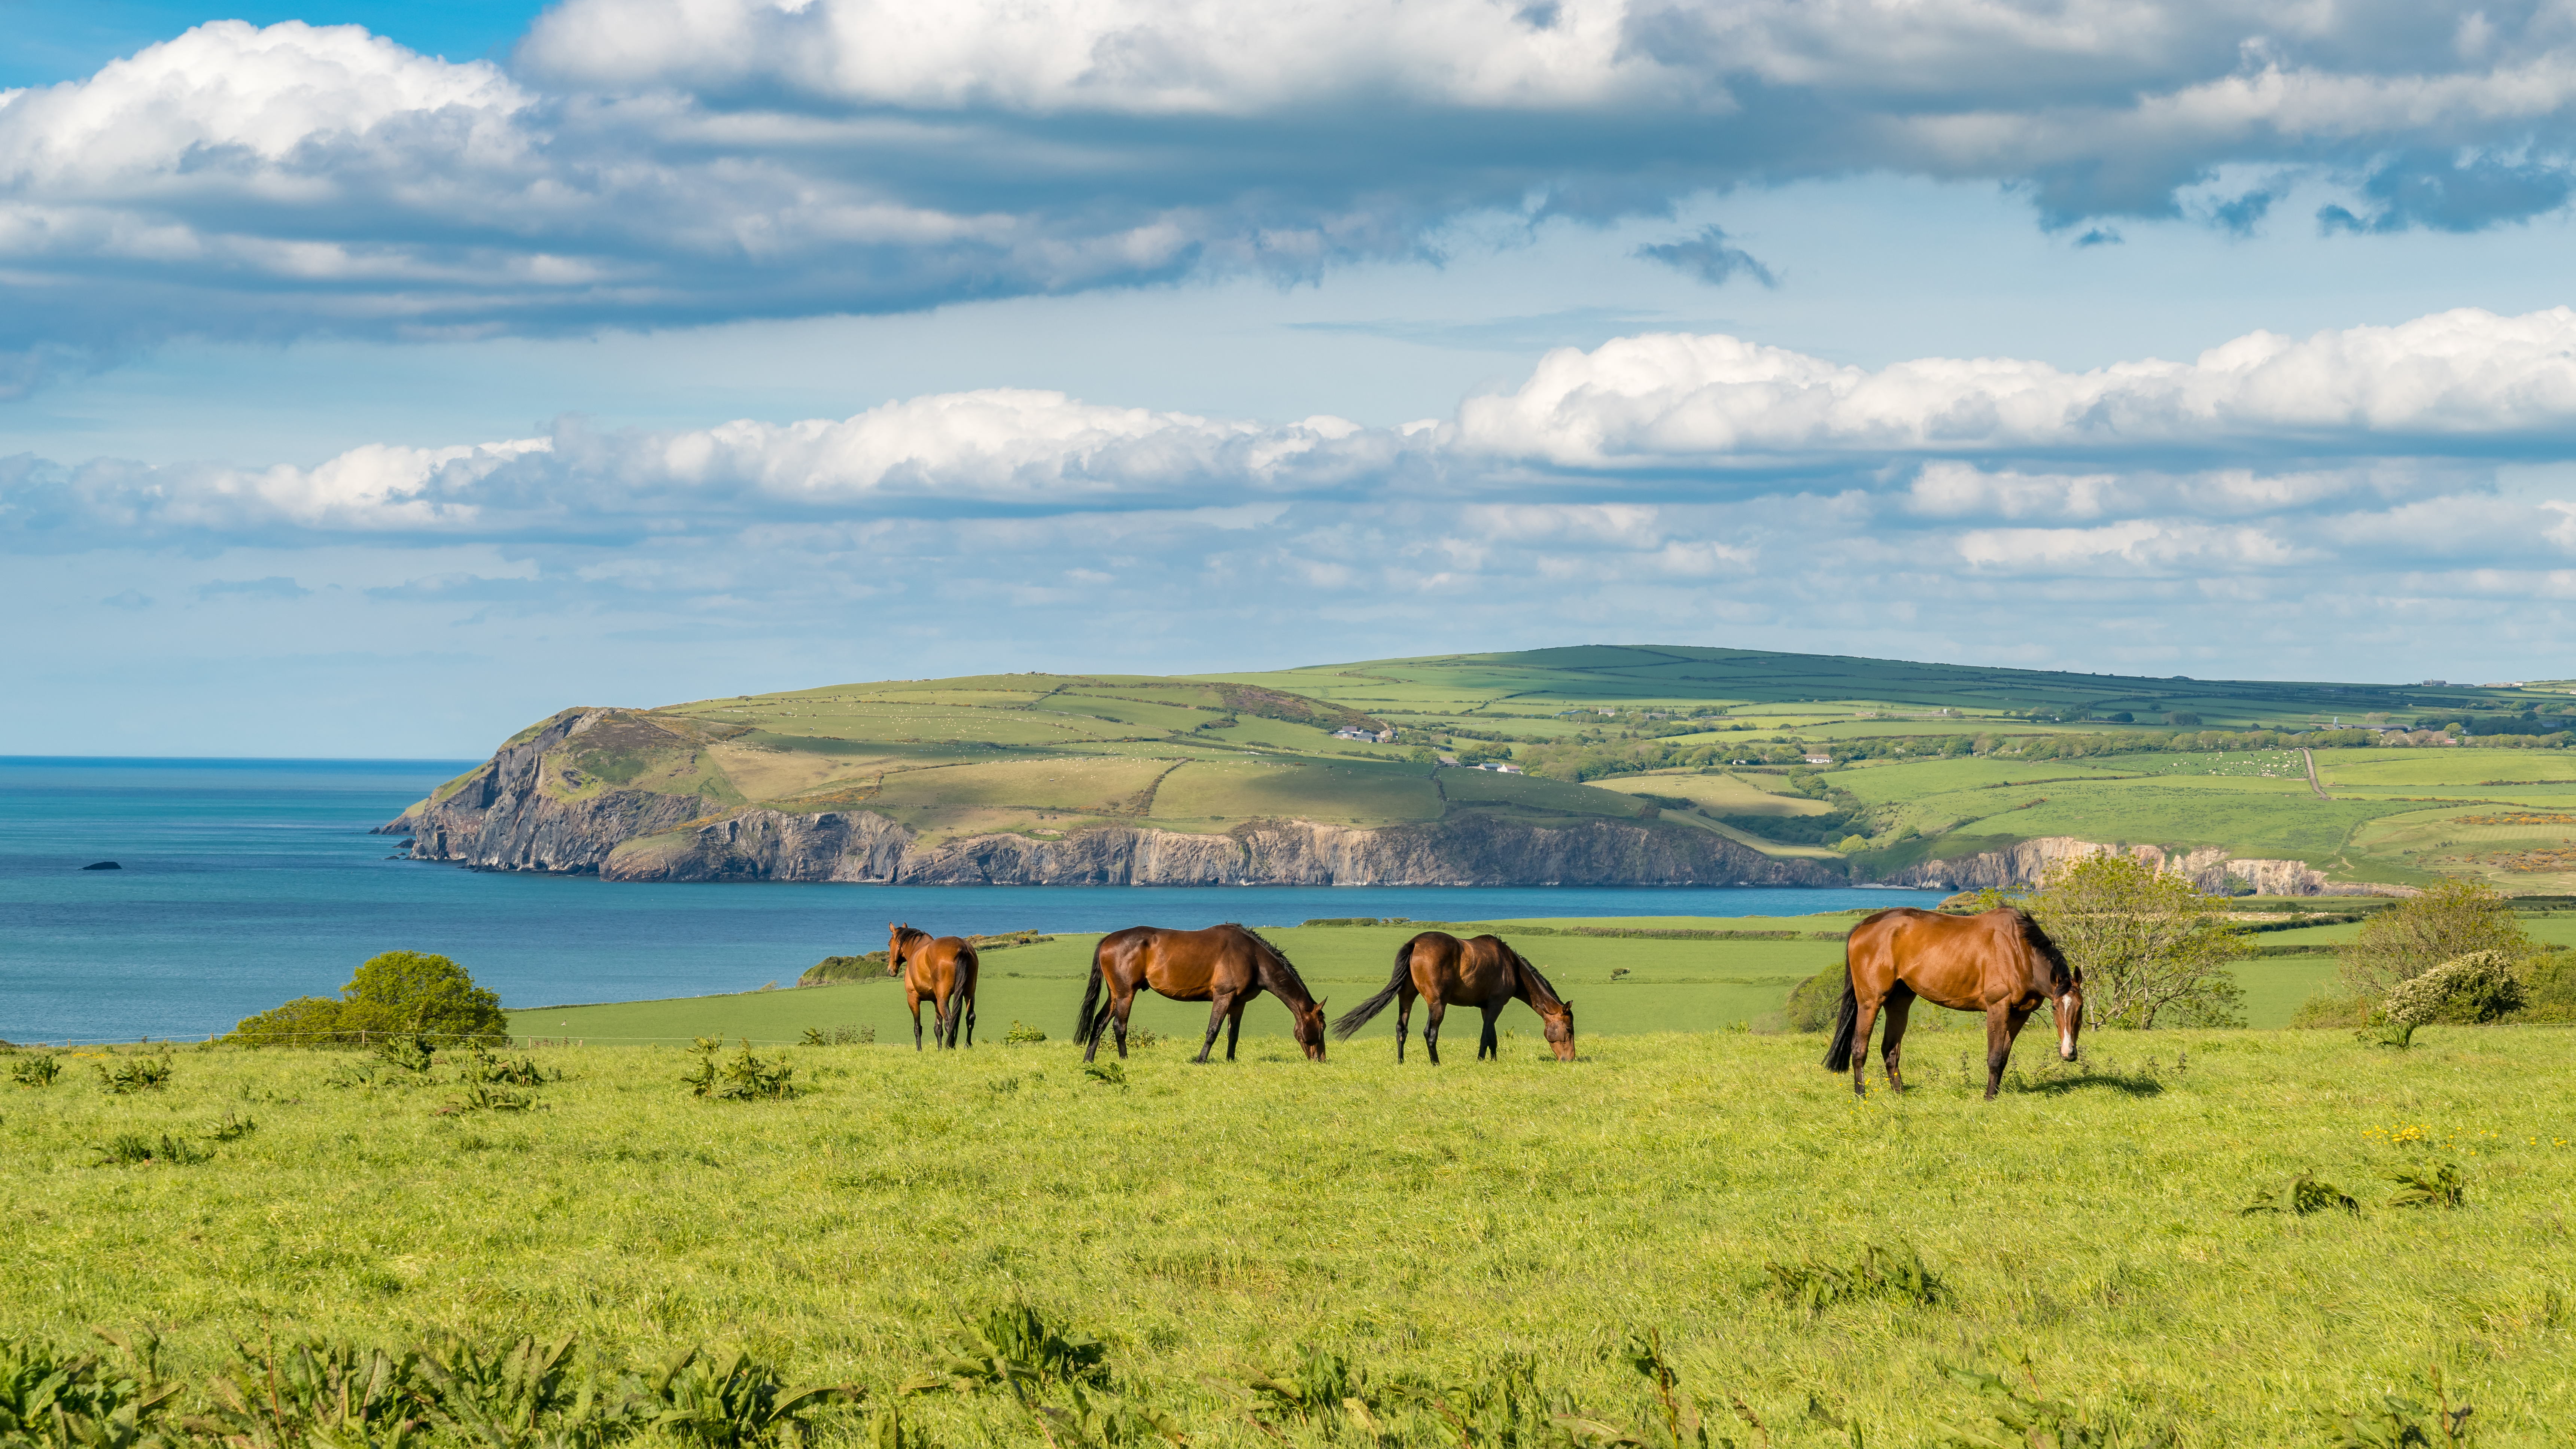 Horses at the cloudy Pembrokeshire coast, seen near Parrog, Pembrokeshire, Wales, UK